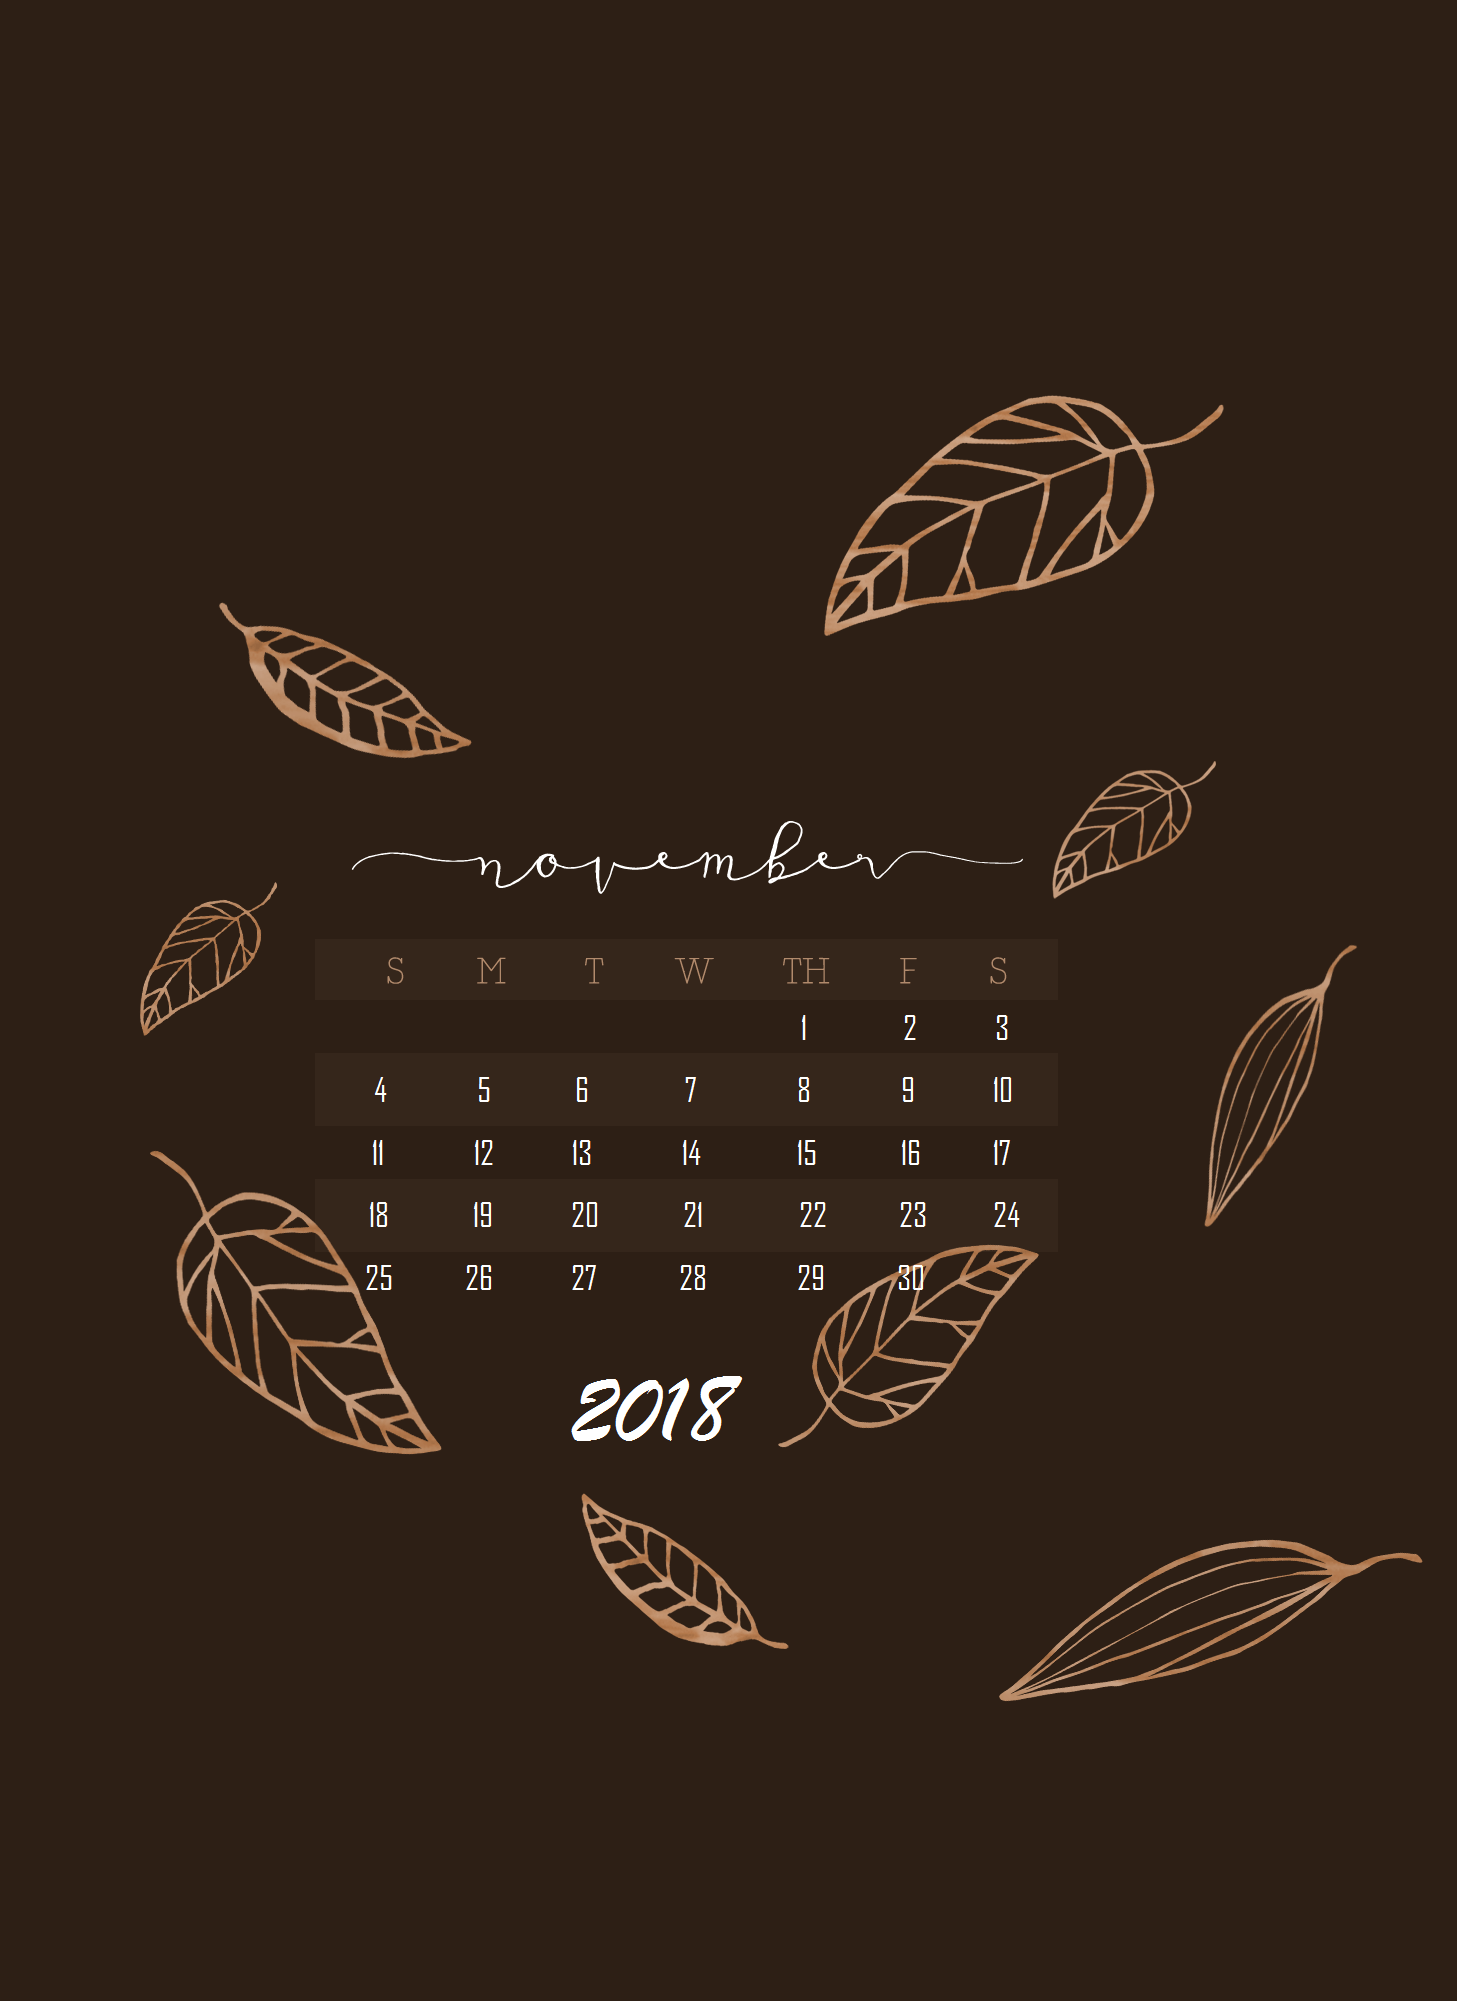 November 2018 iPhone Calendar Wallpaper. MaxCalendars in 2018